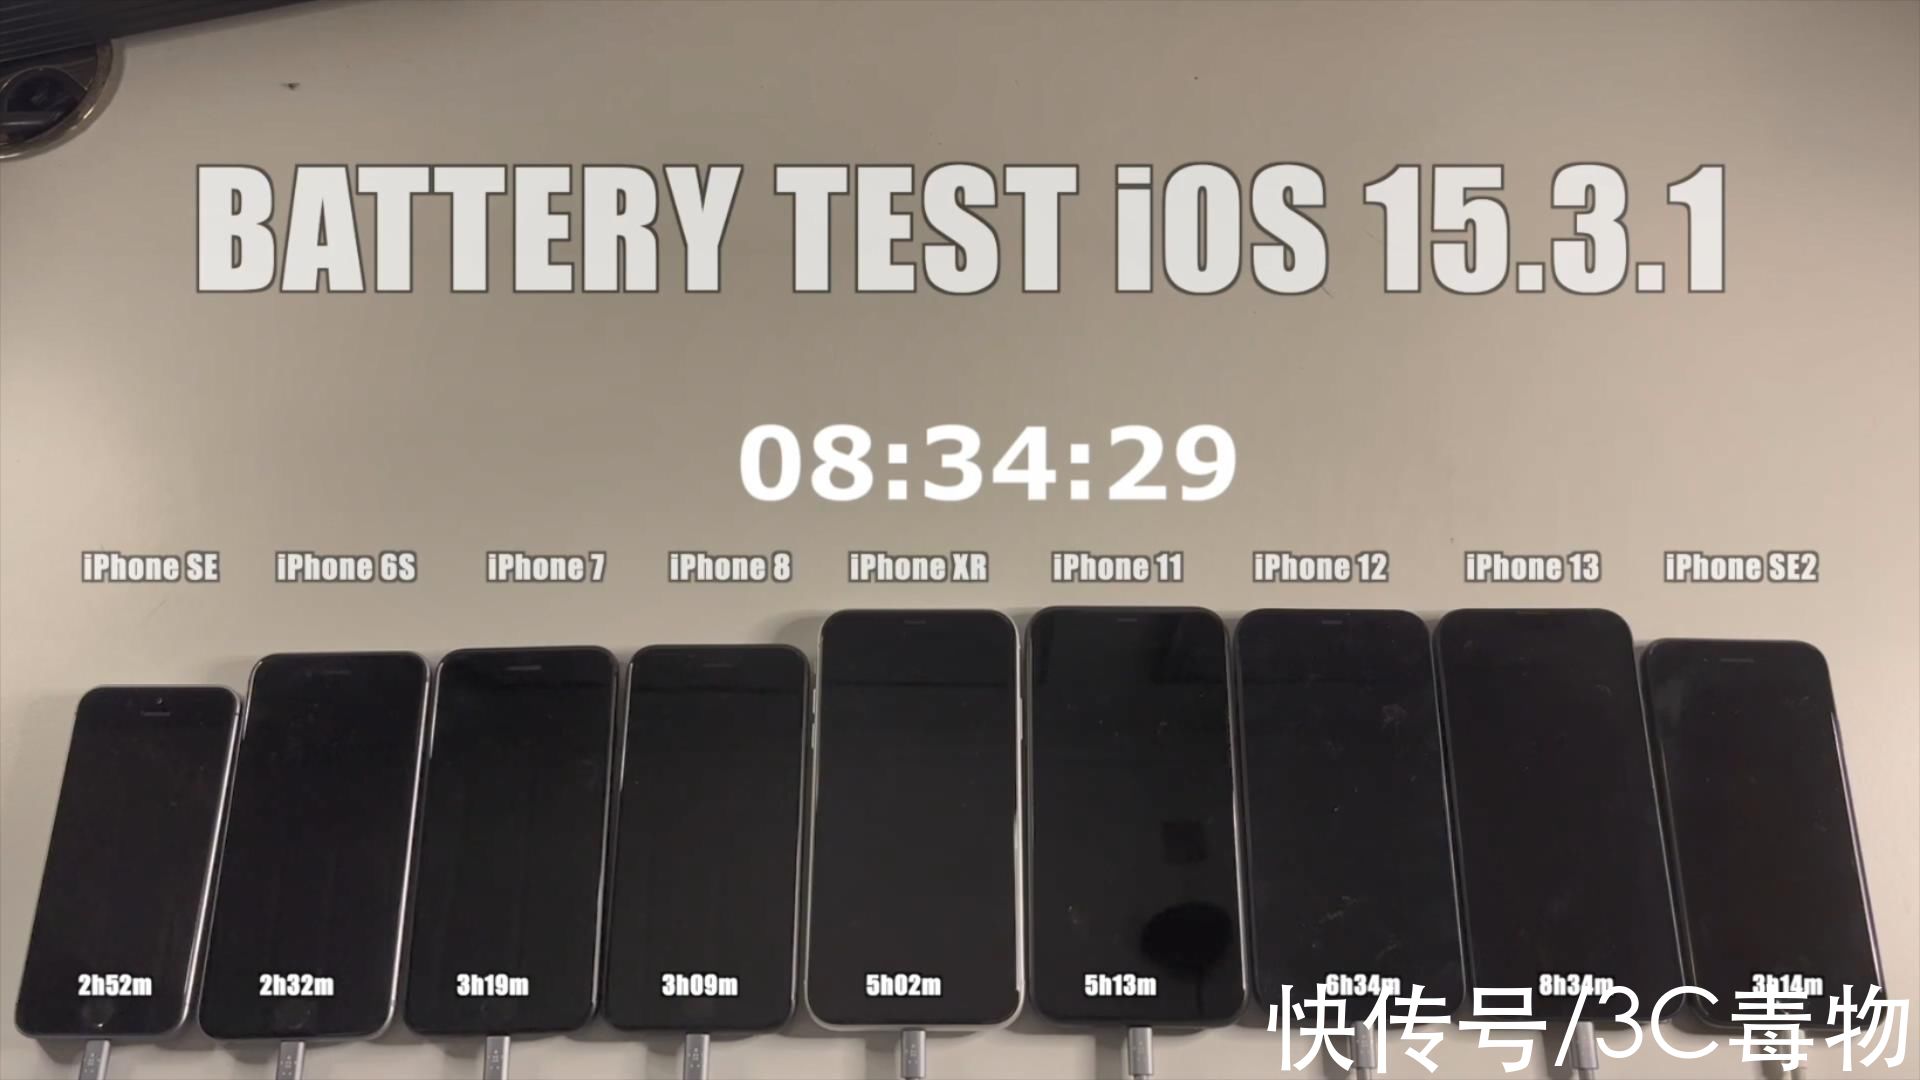 ios|iOS15.3.1千万别乱更新，只对这5款iPhone友好，另外四部不要升级